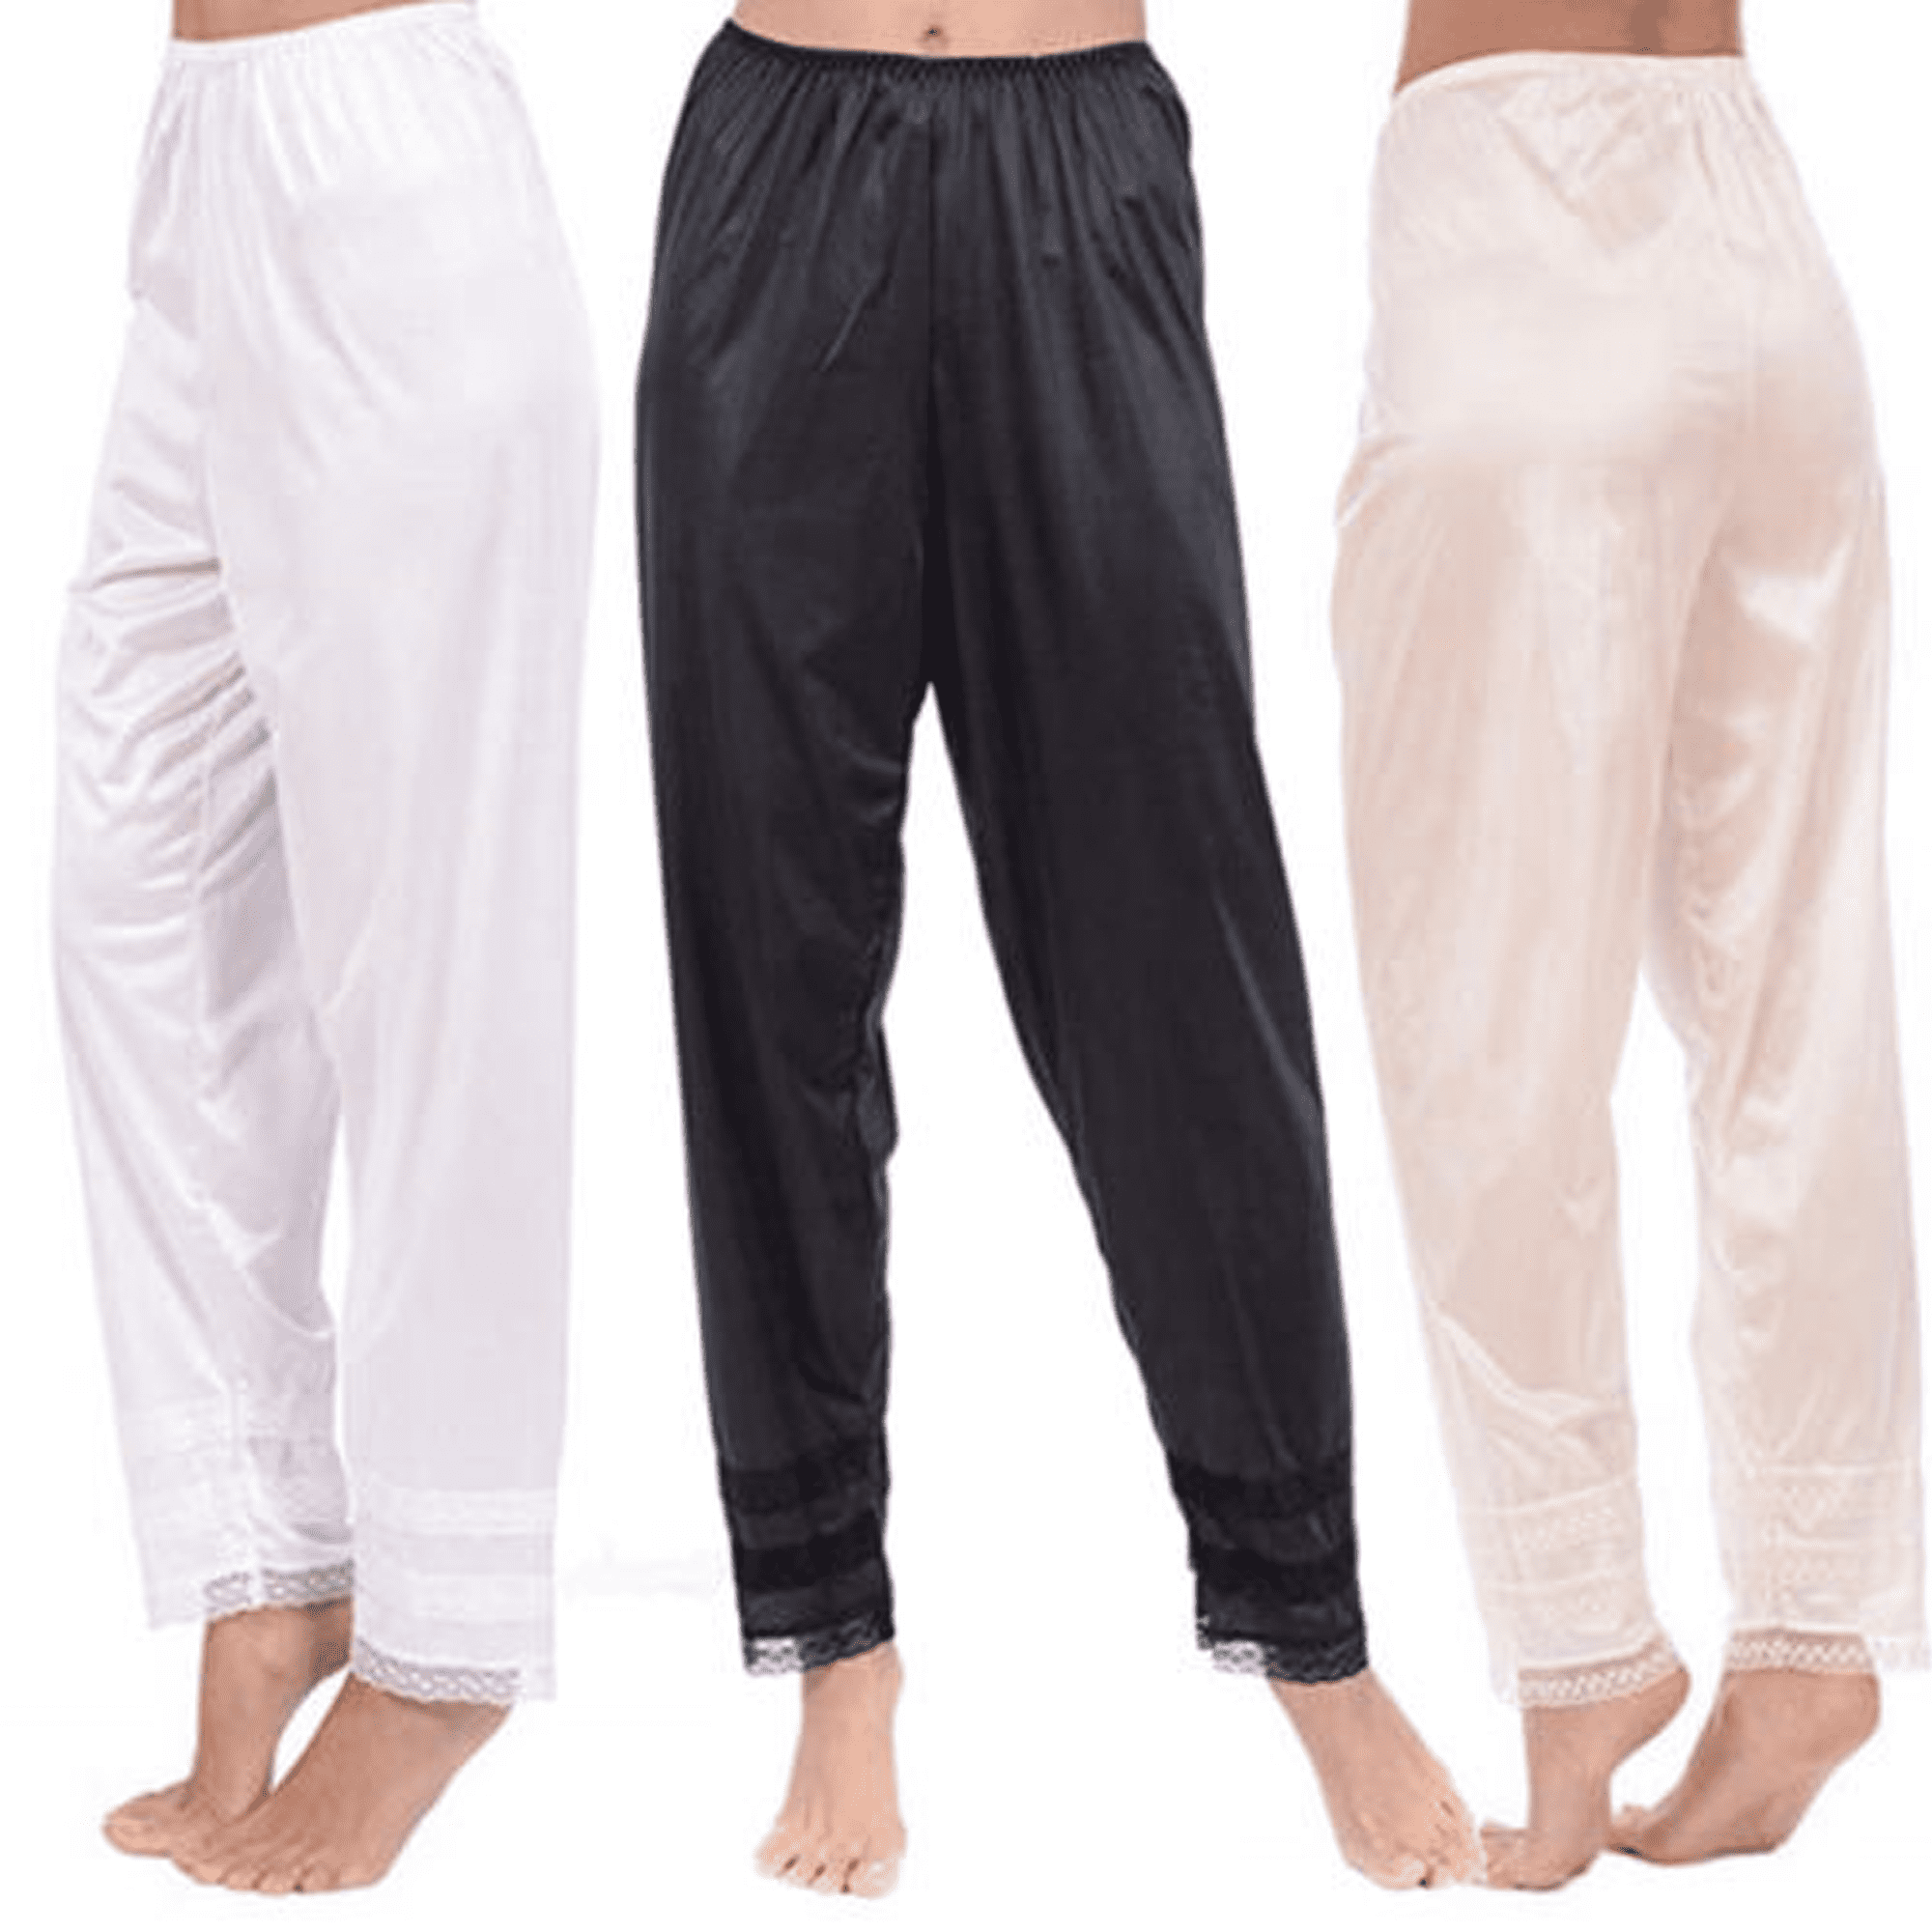 night pants for ladies